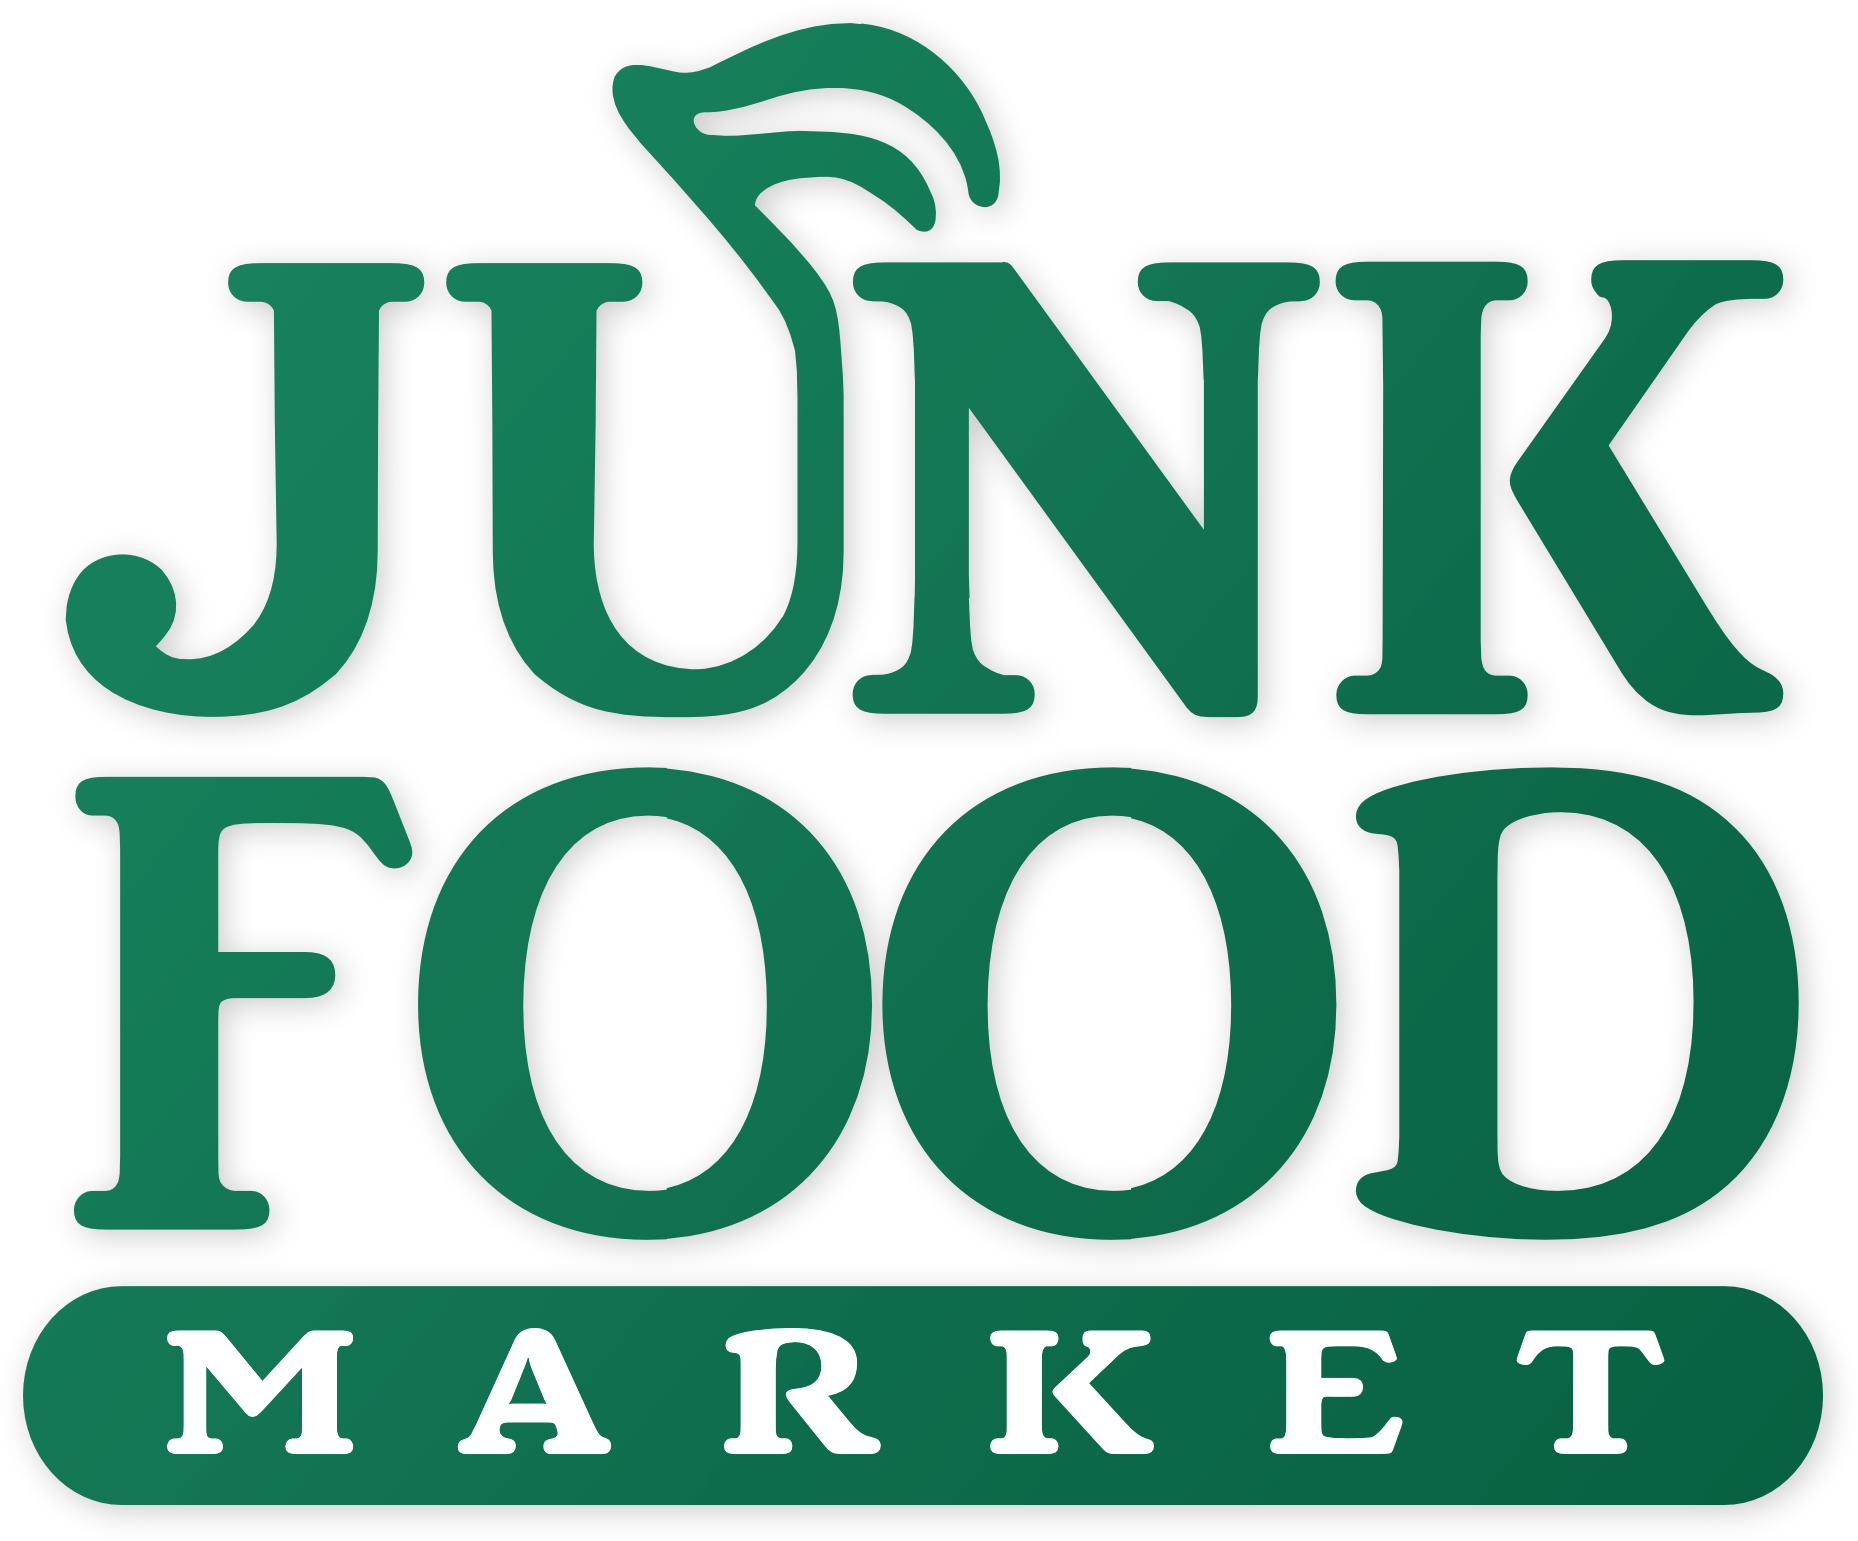 Junk Food Brand Logo - Food Logos